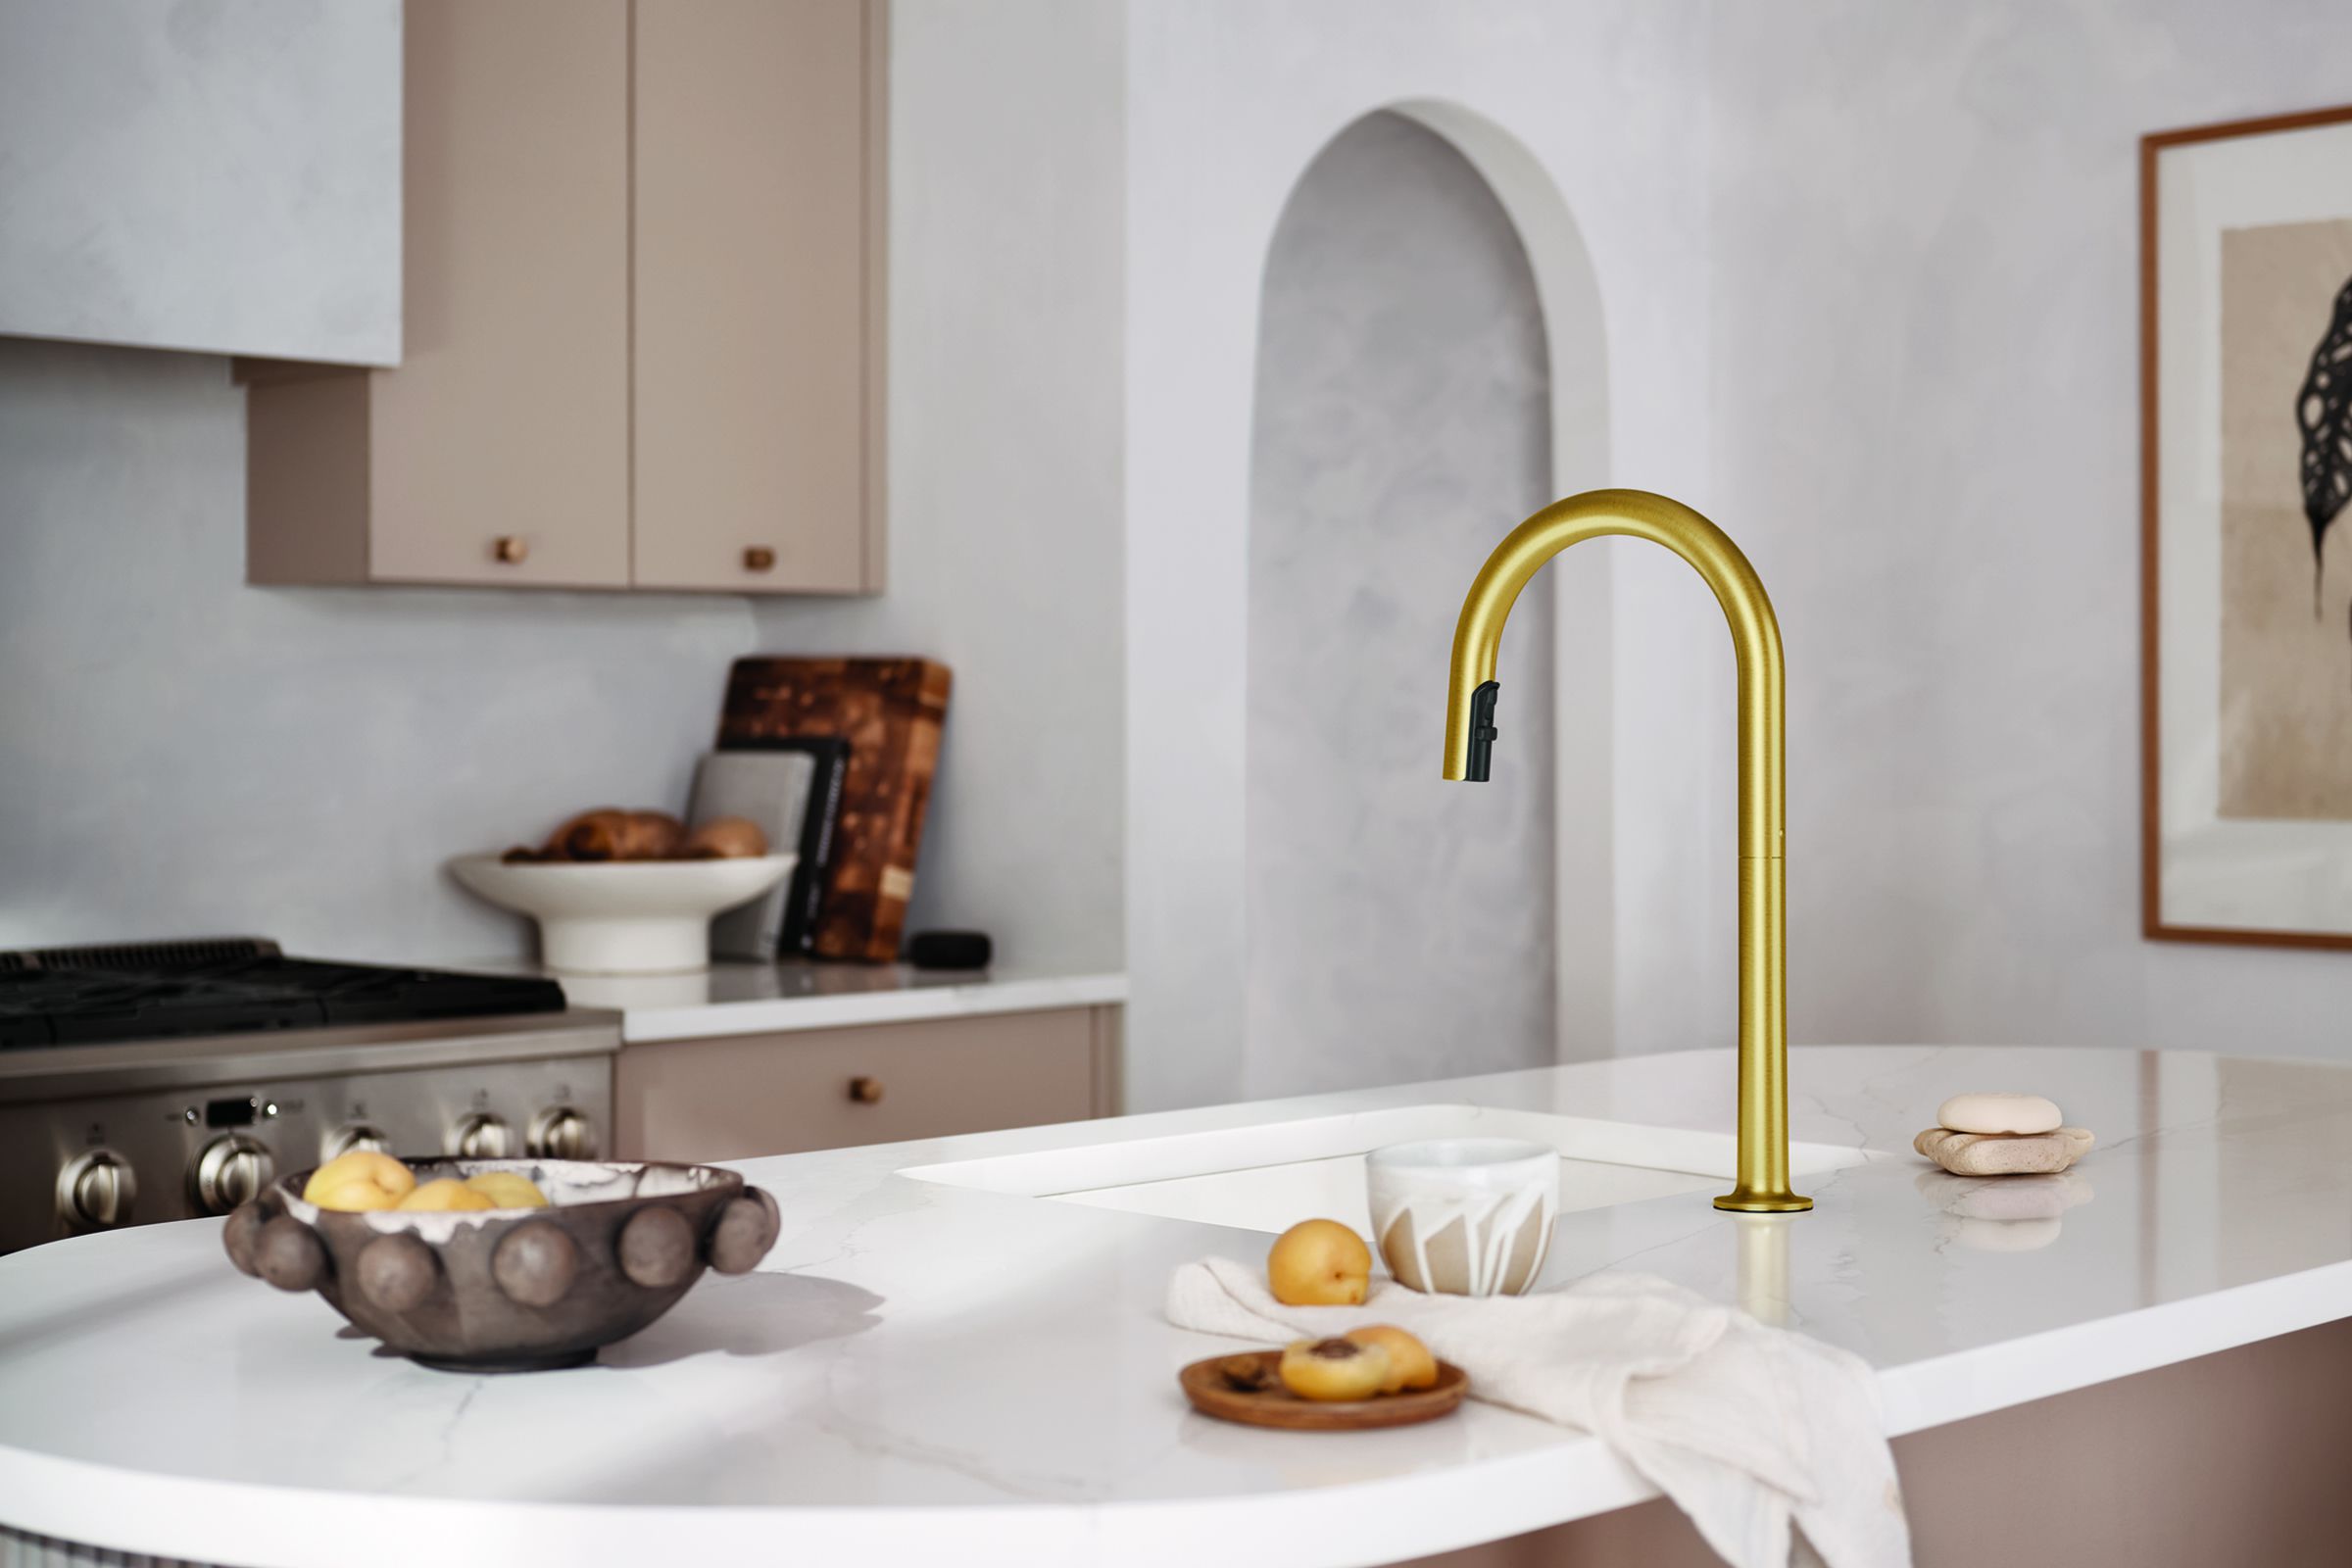 Moen’s newest smart faucet goes handle-free.